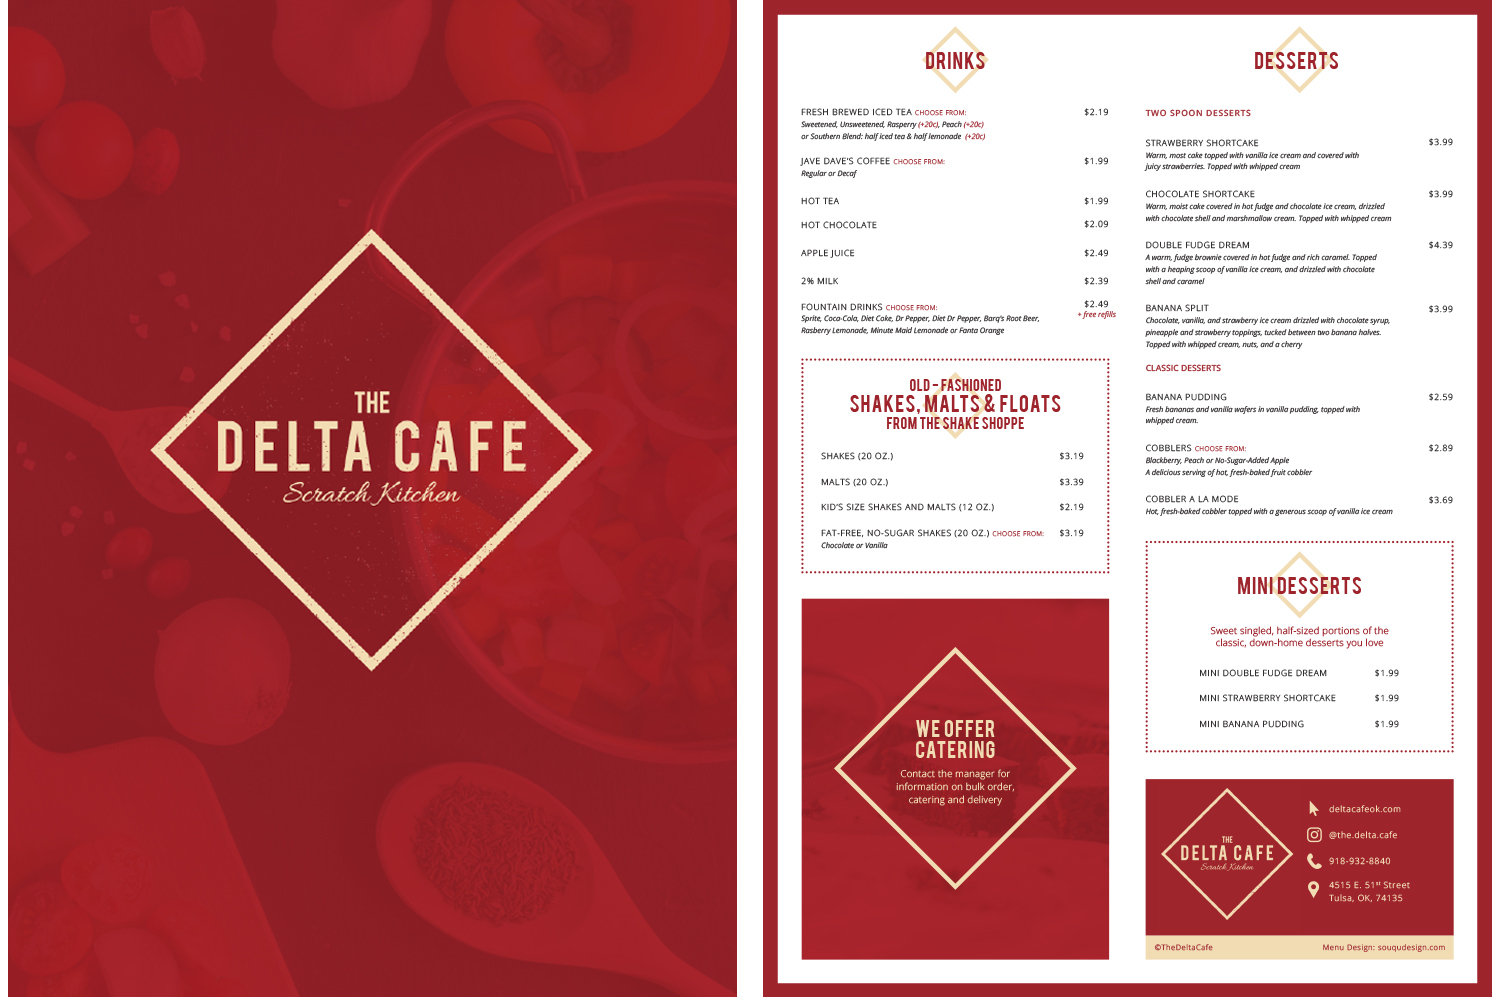 The Delta Cafe — souqudesign